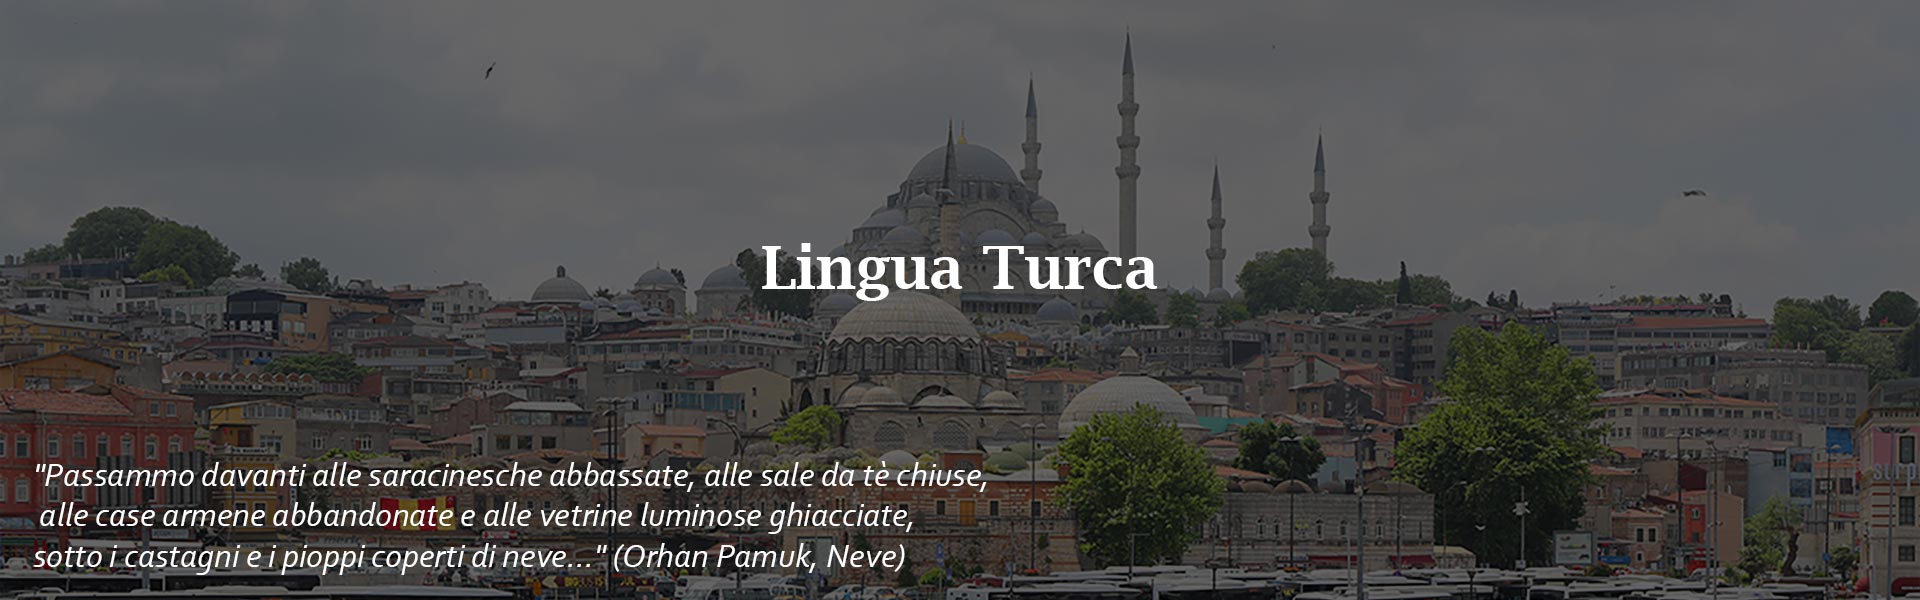 lingua-turca-Alif